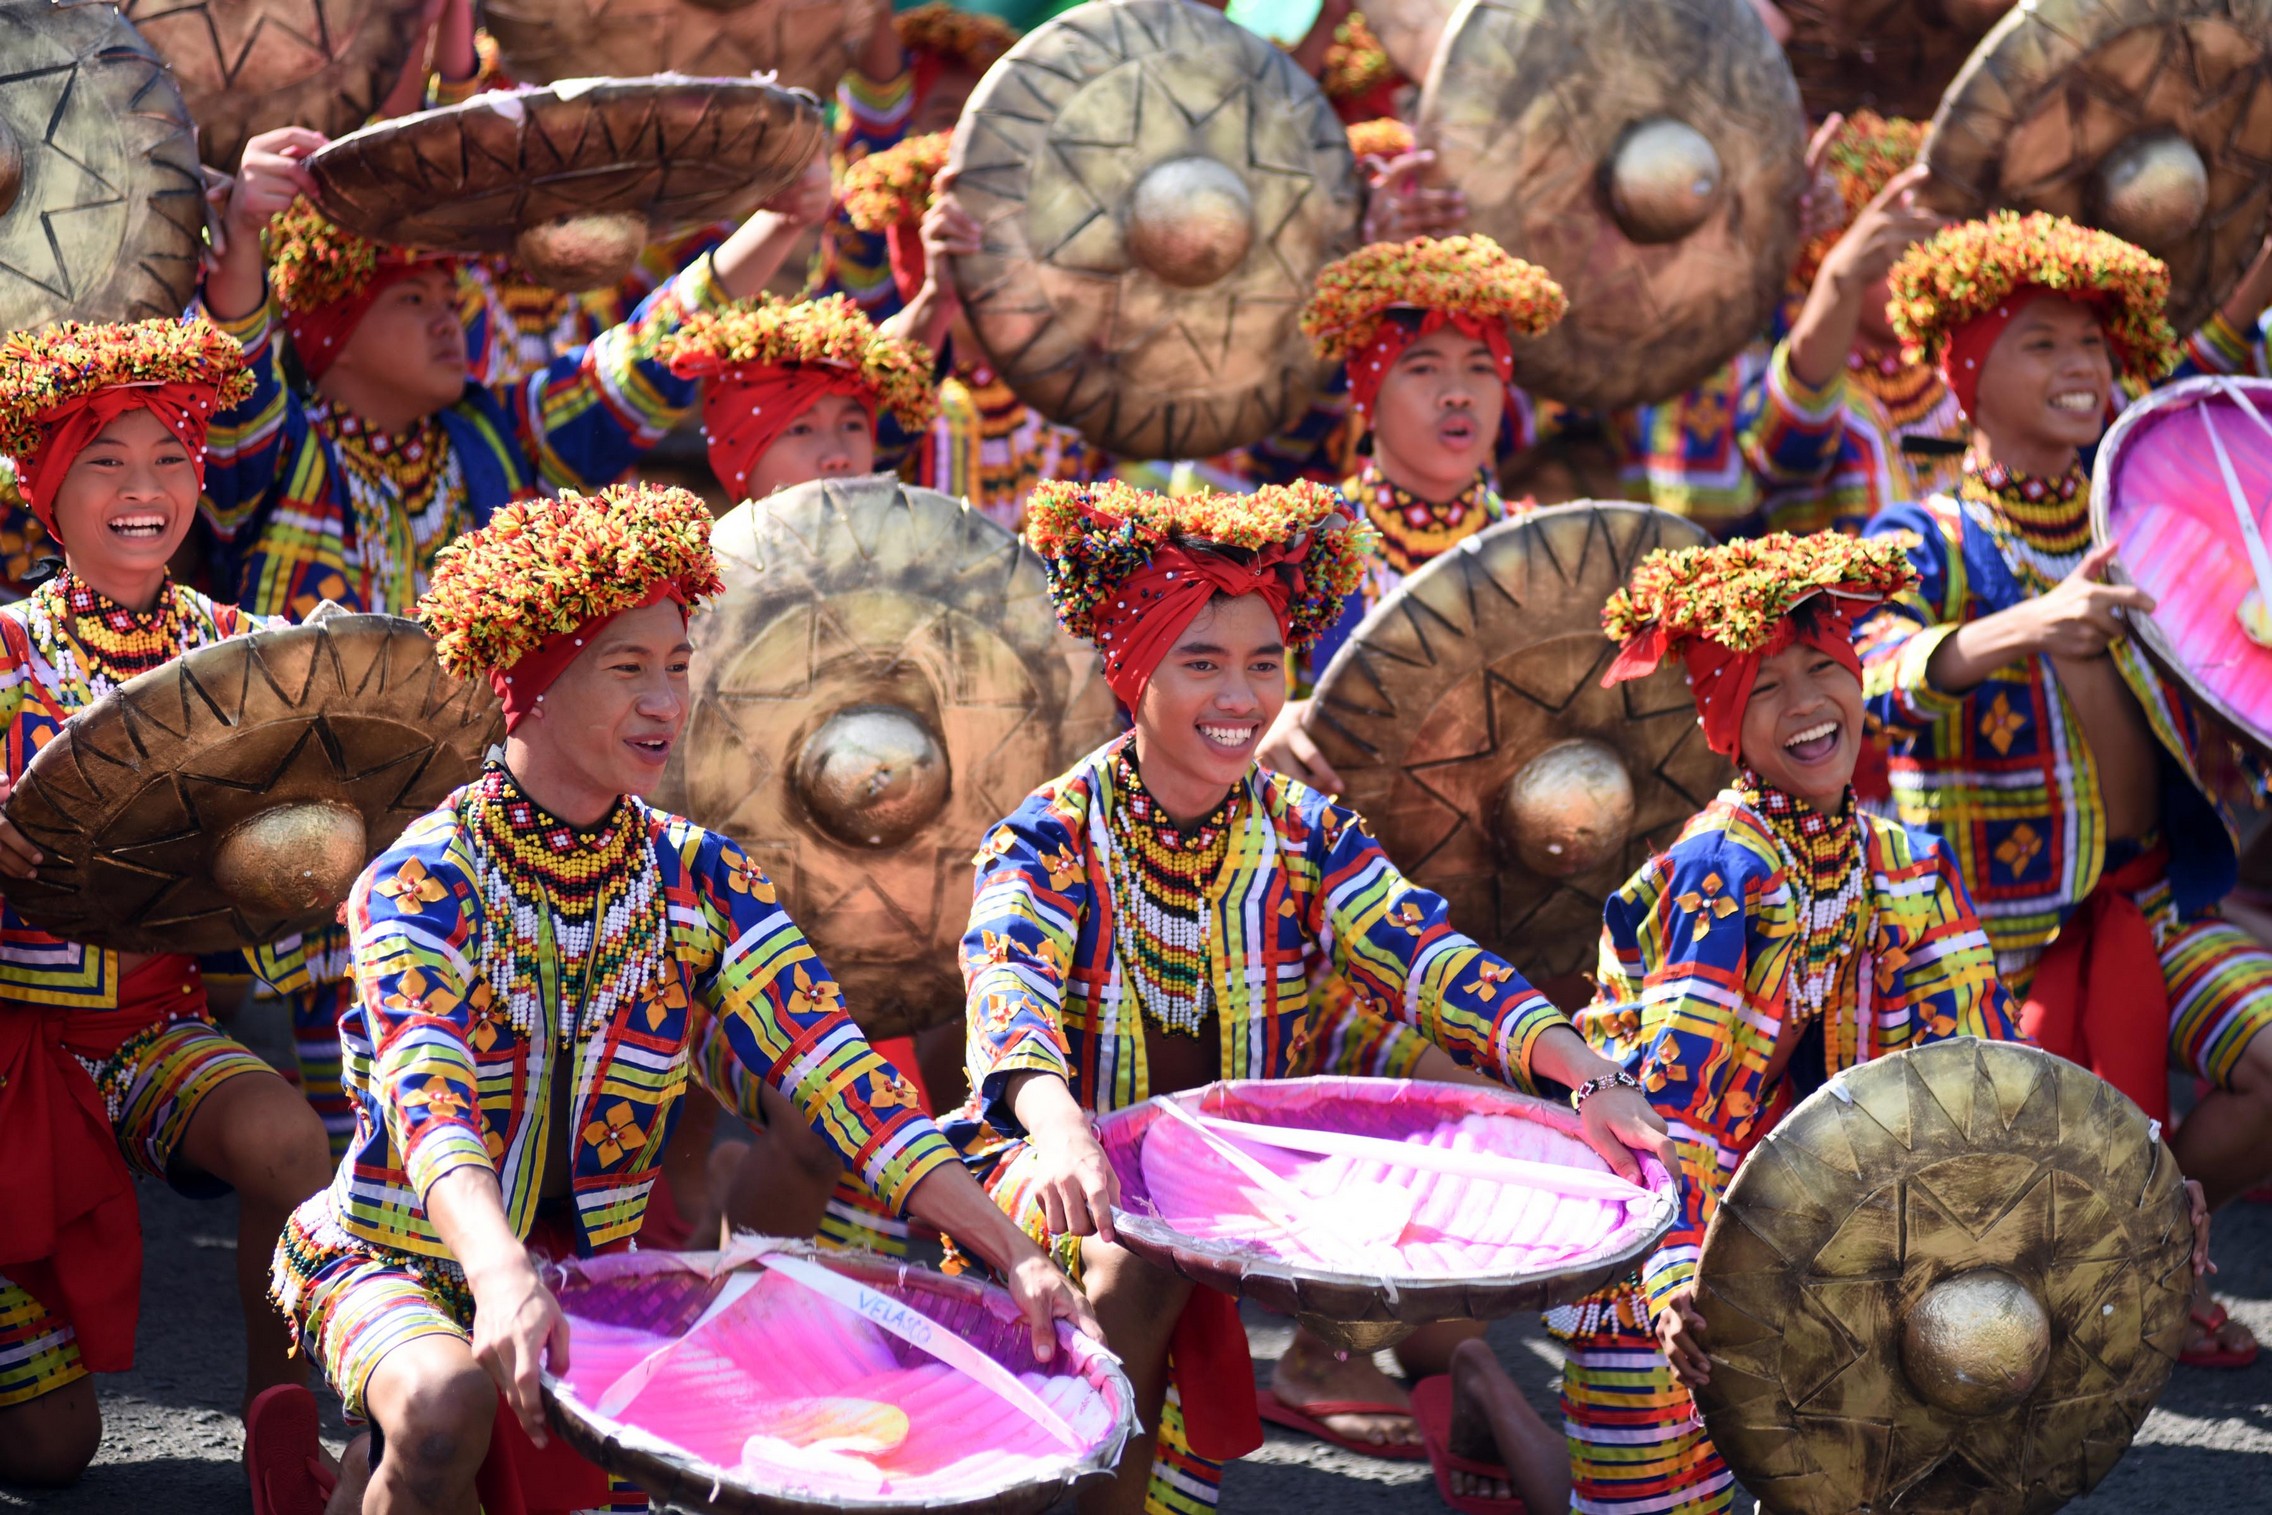 Palace declares Aug. 16 a holiday in Davao City for Kadayawan Festival